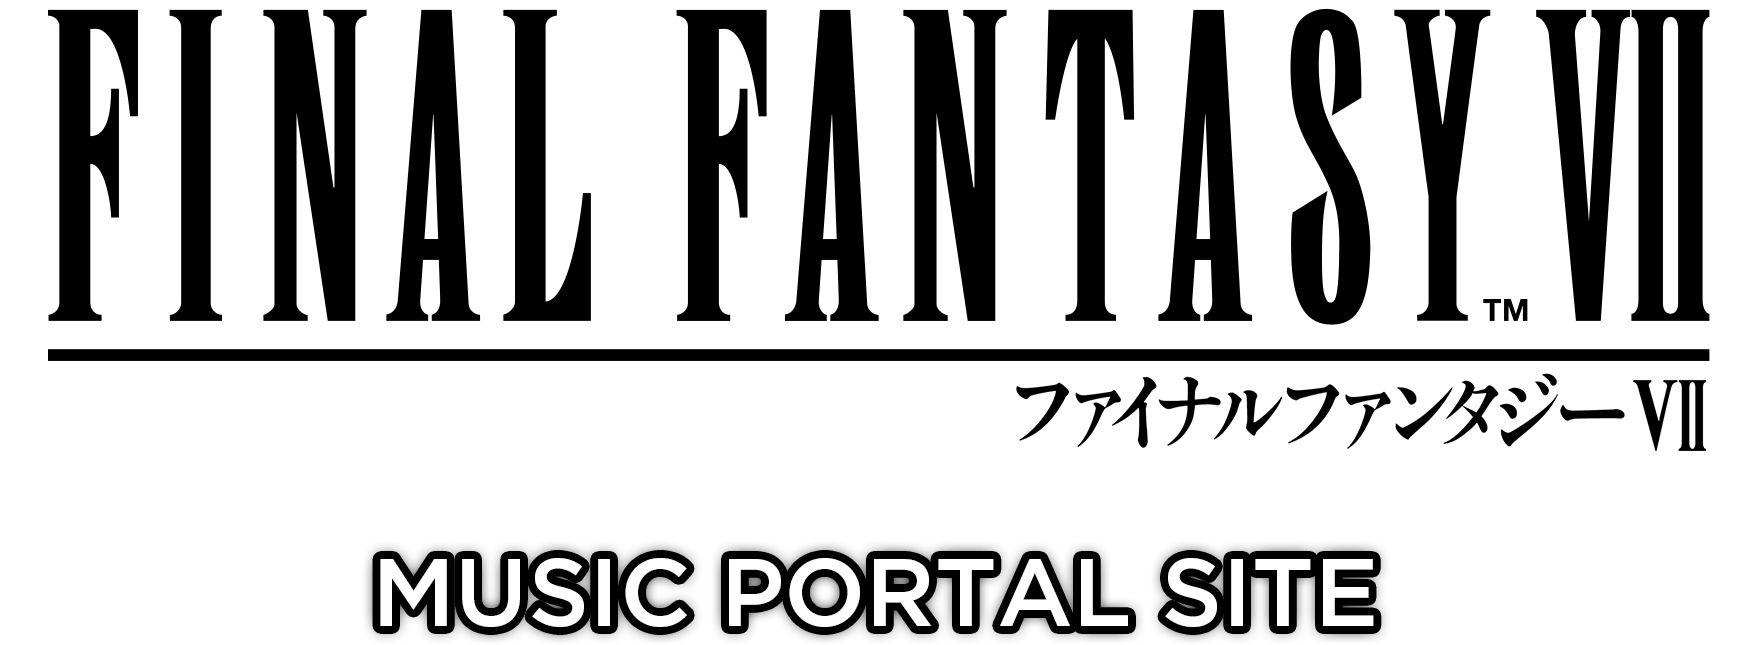 FINAL FANTASY VII MUSIC PORTAL SITE